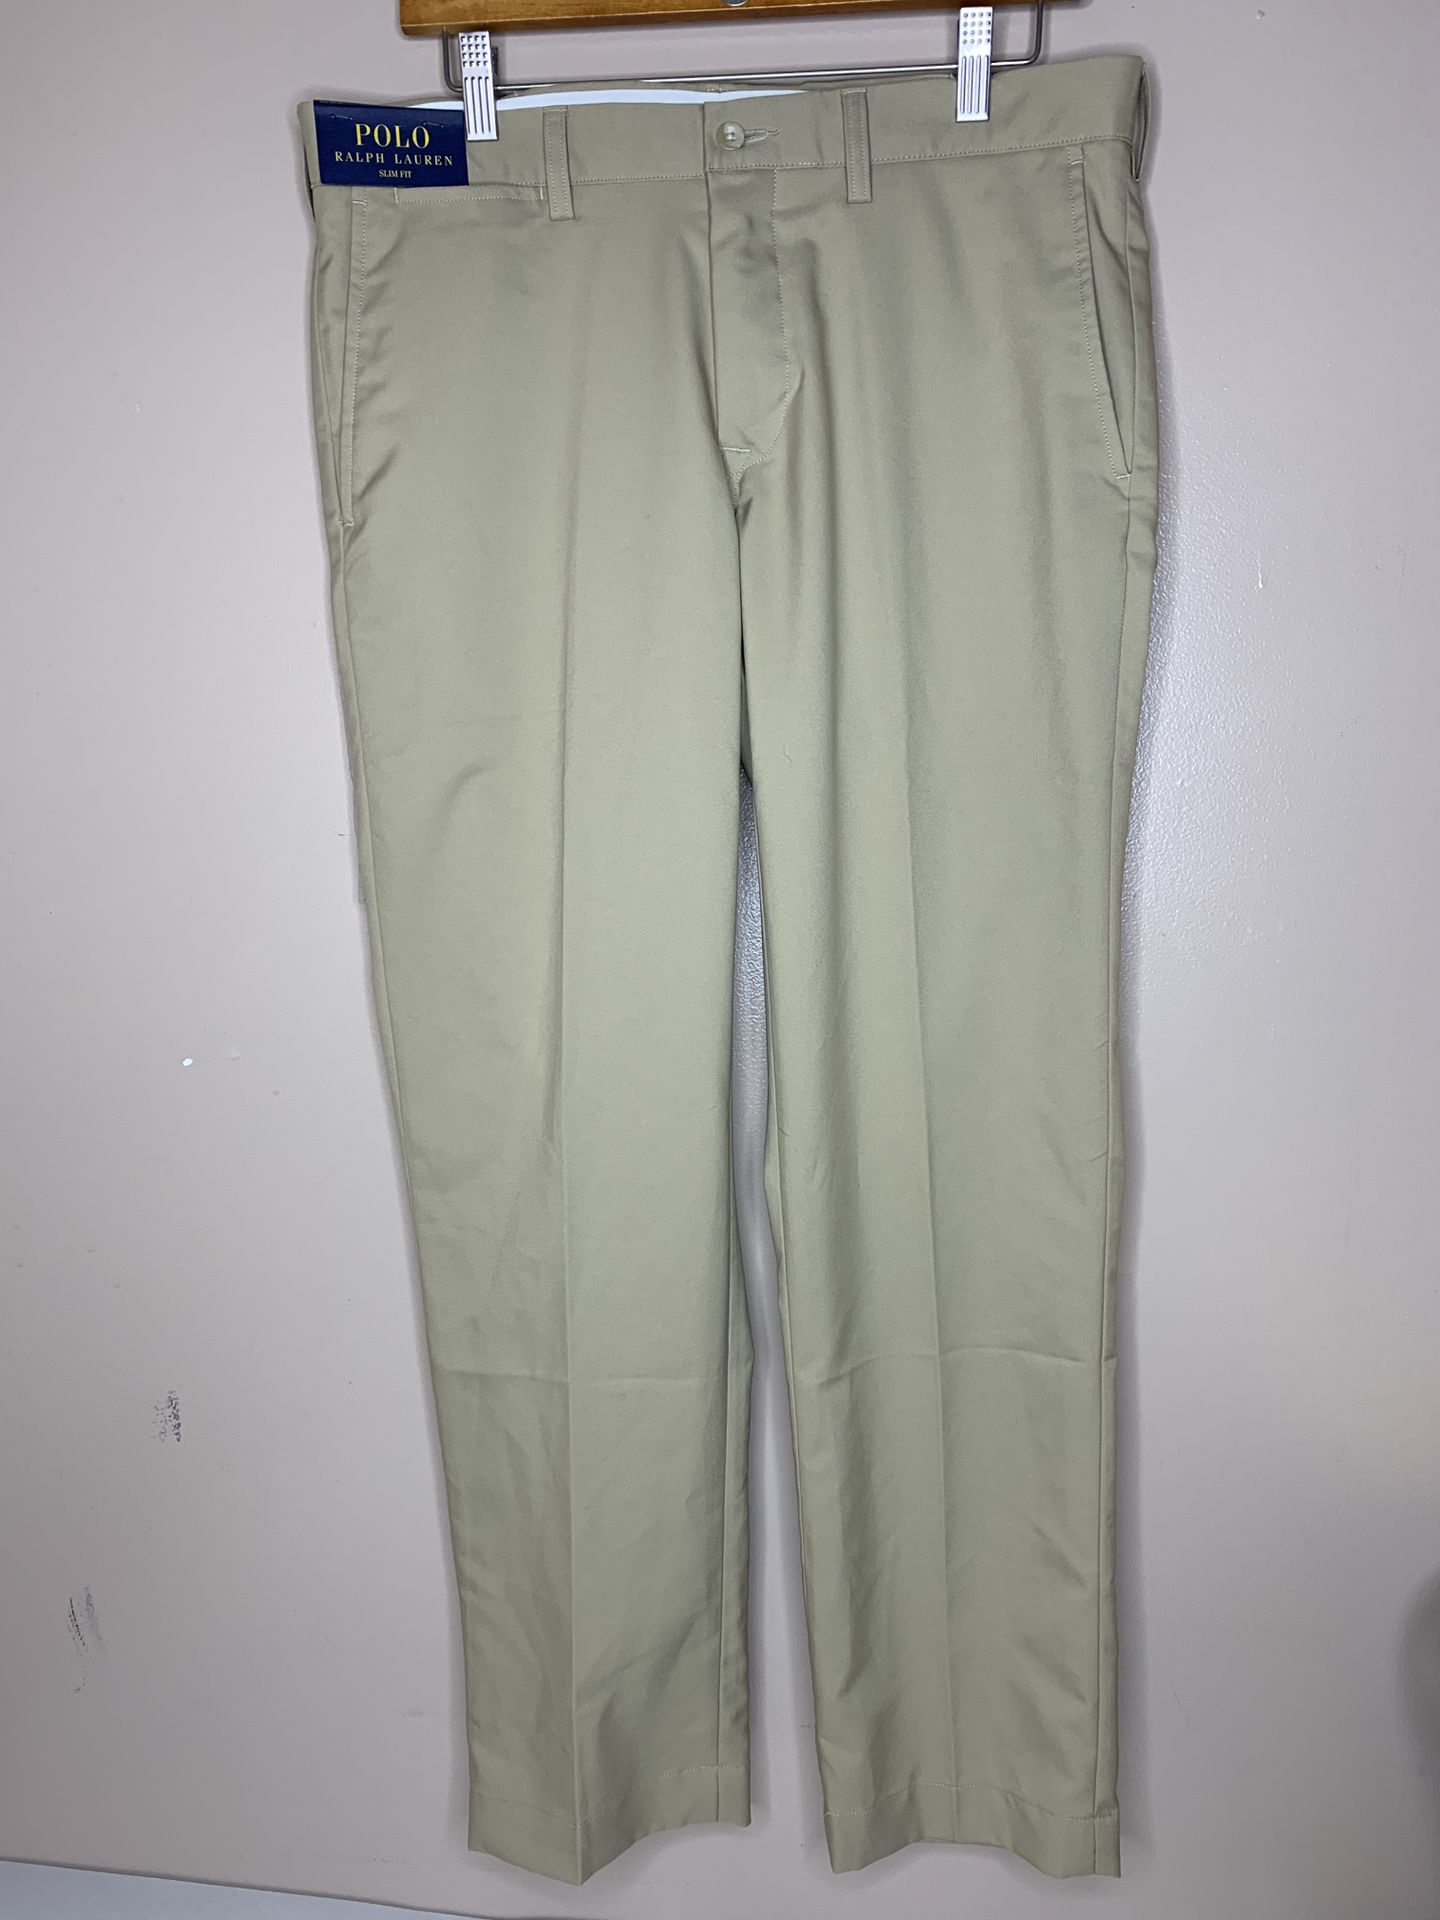 Ralph Lauren Khaki SLIM FIT Pants Chino $198 34W / 30L New with tags 